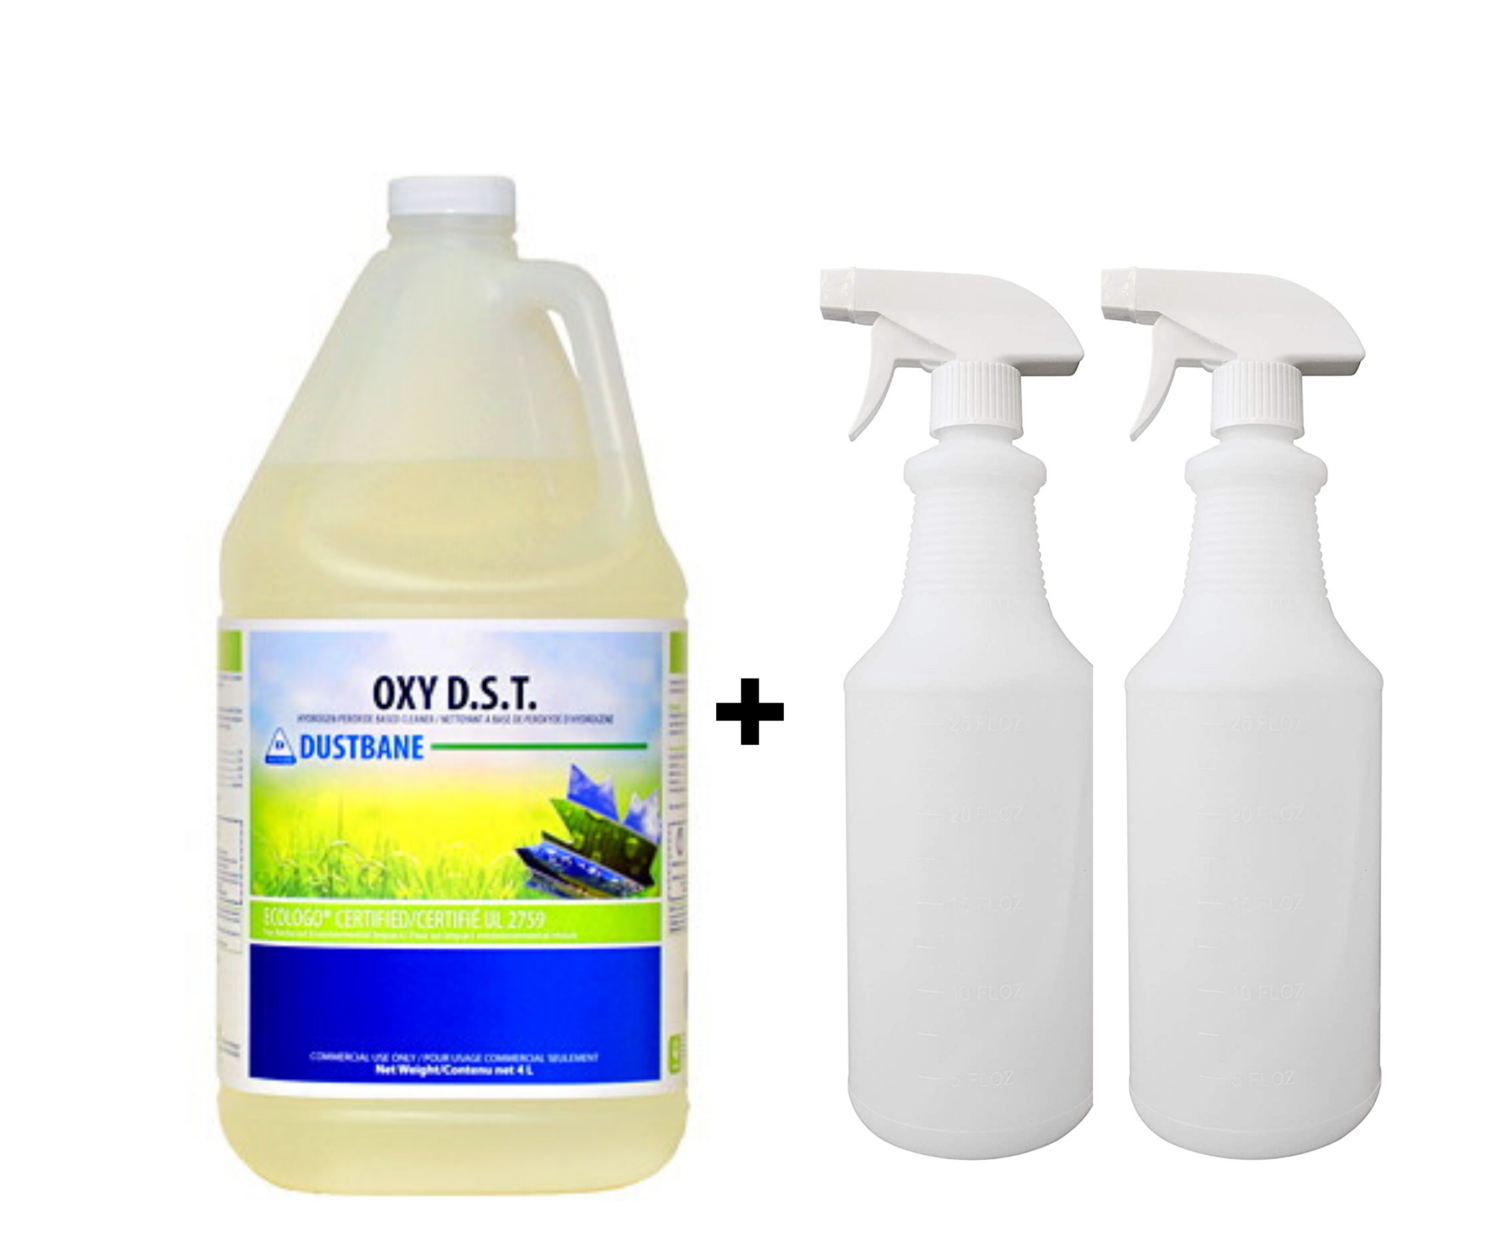 Dustbane Oxy D.S.T. Hydrogen Peroxide Based Cleaner, 4 L + BONUS Spray Bottle (2 Pack)